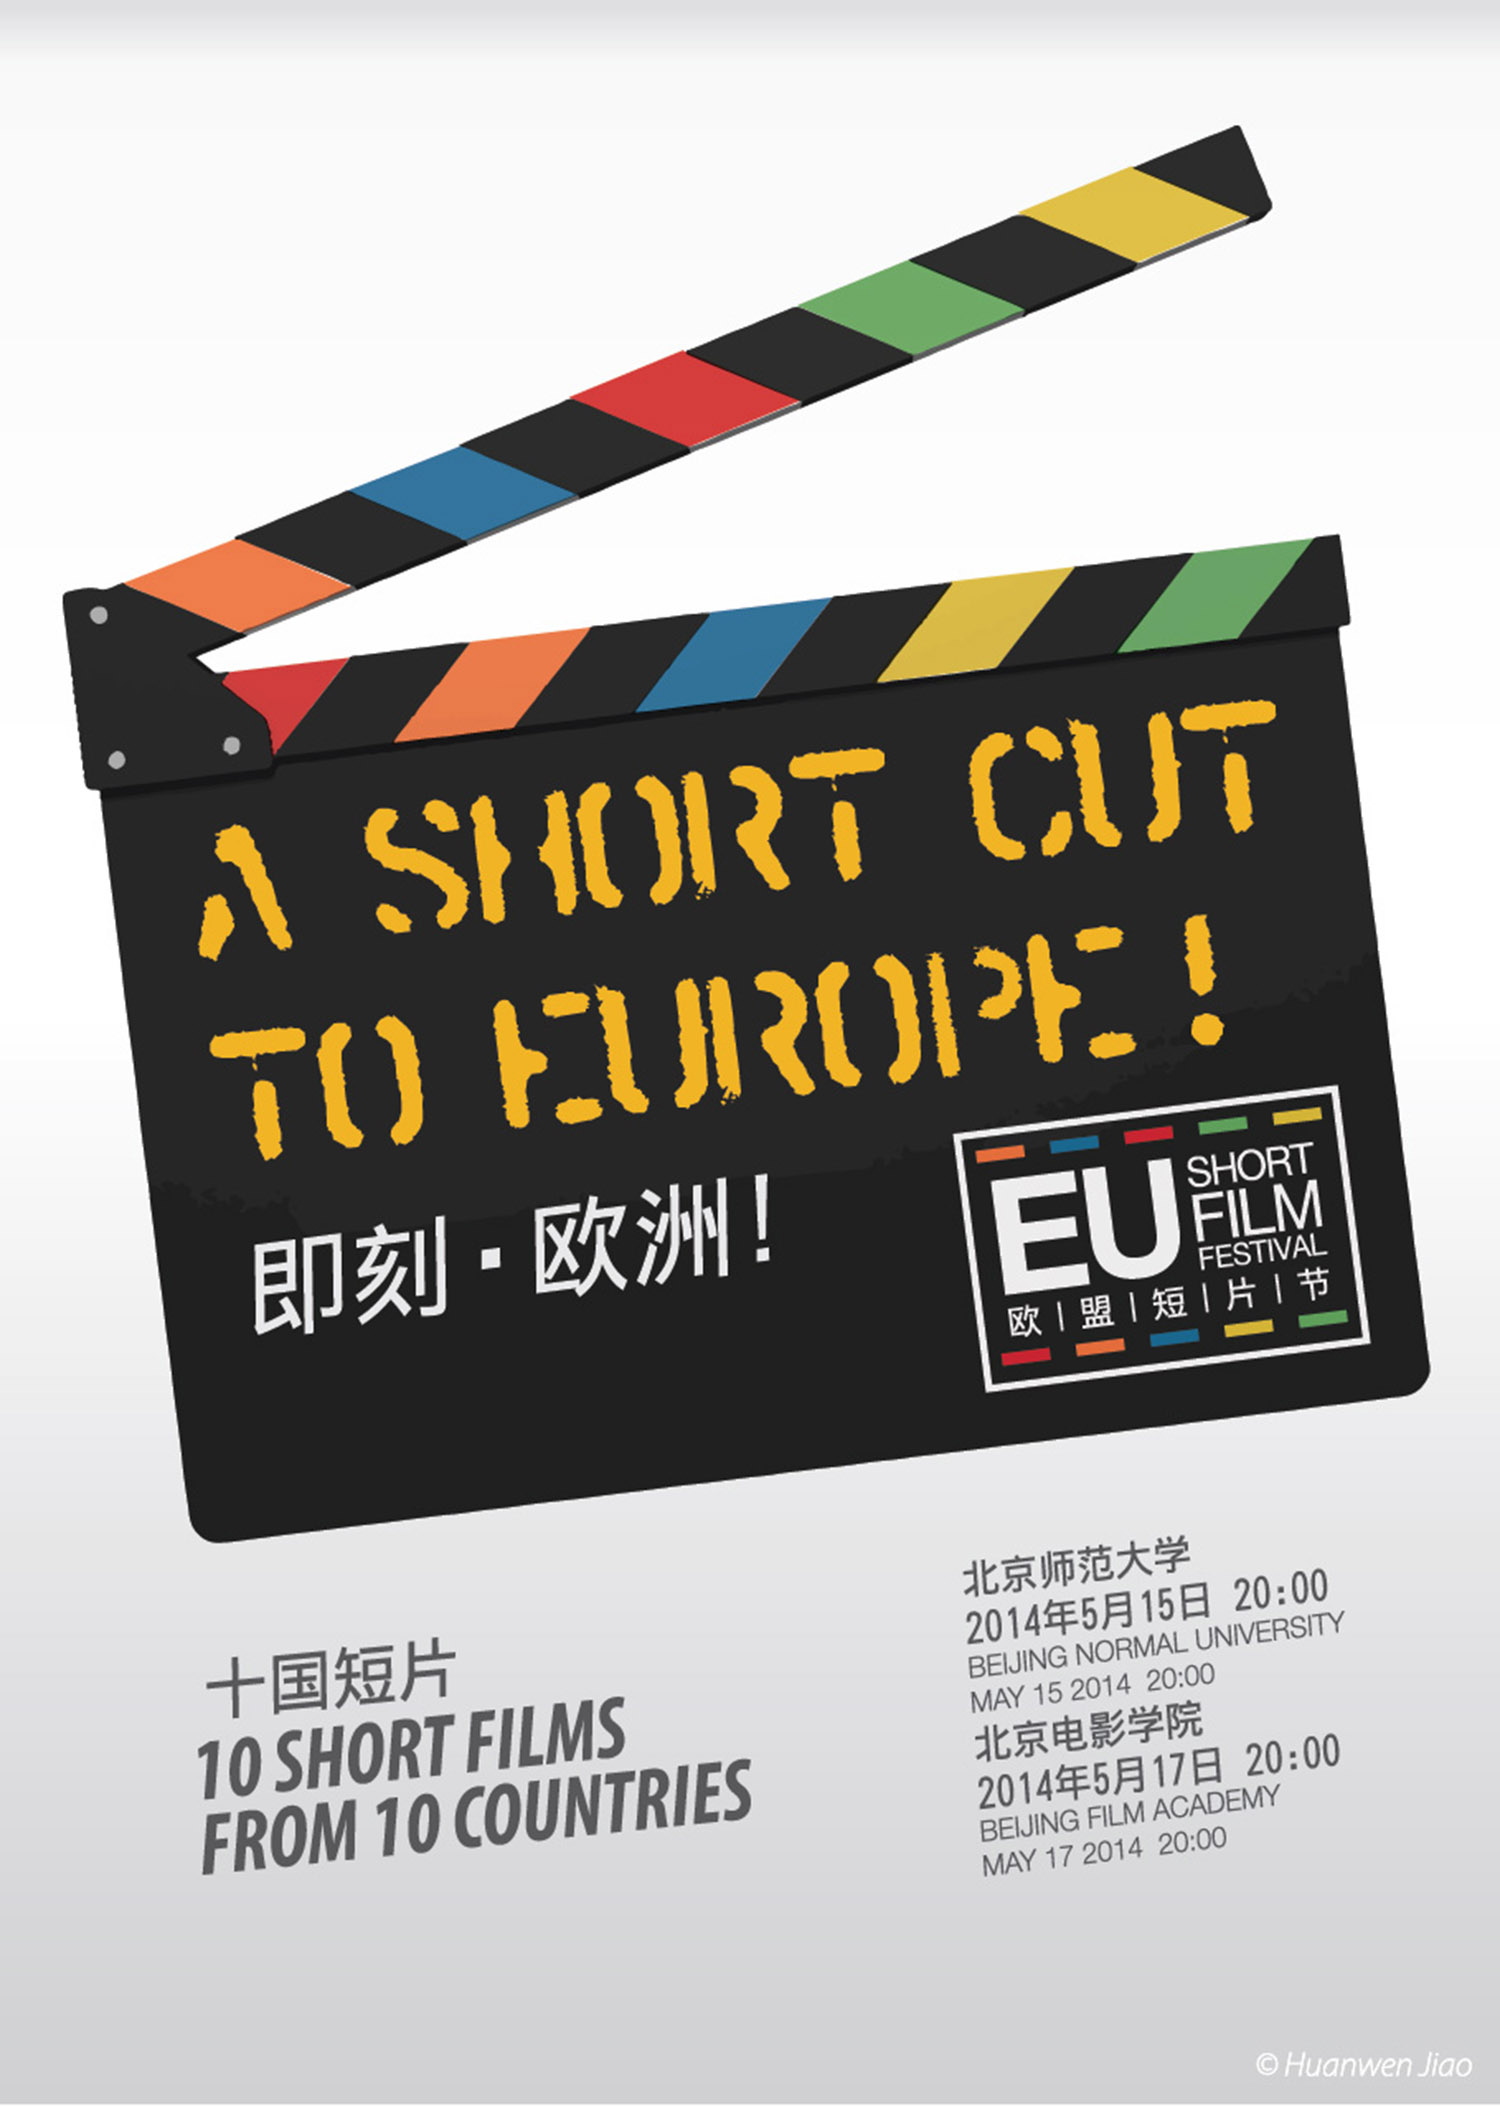 EU_short_film_festival_proposal-21.jpg